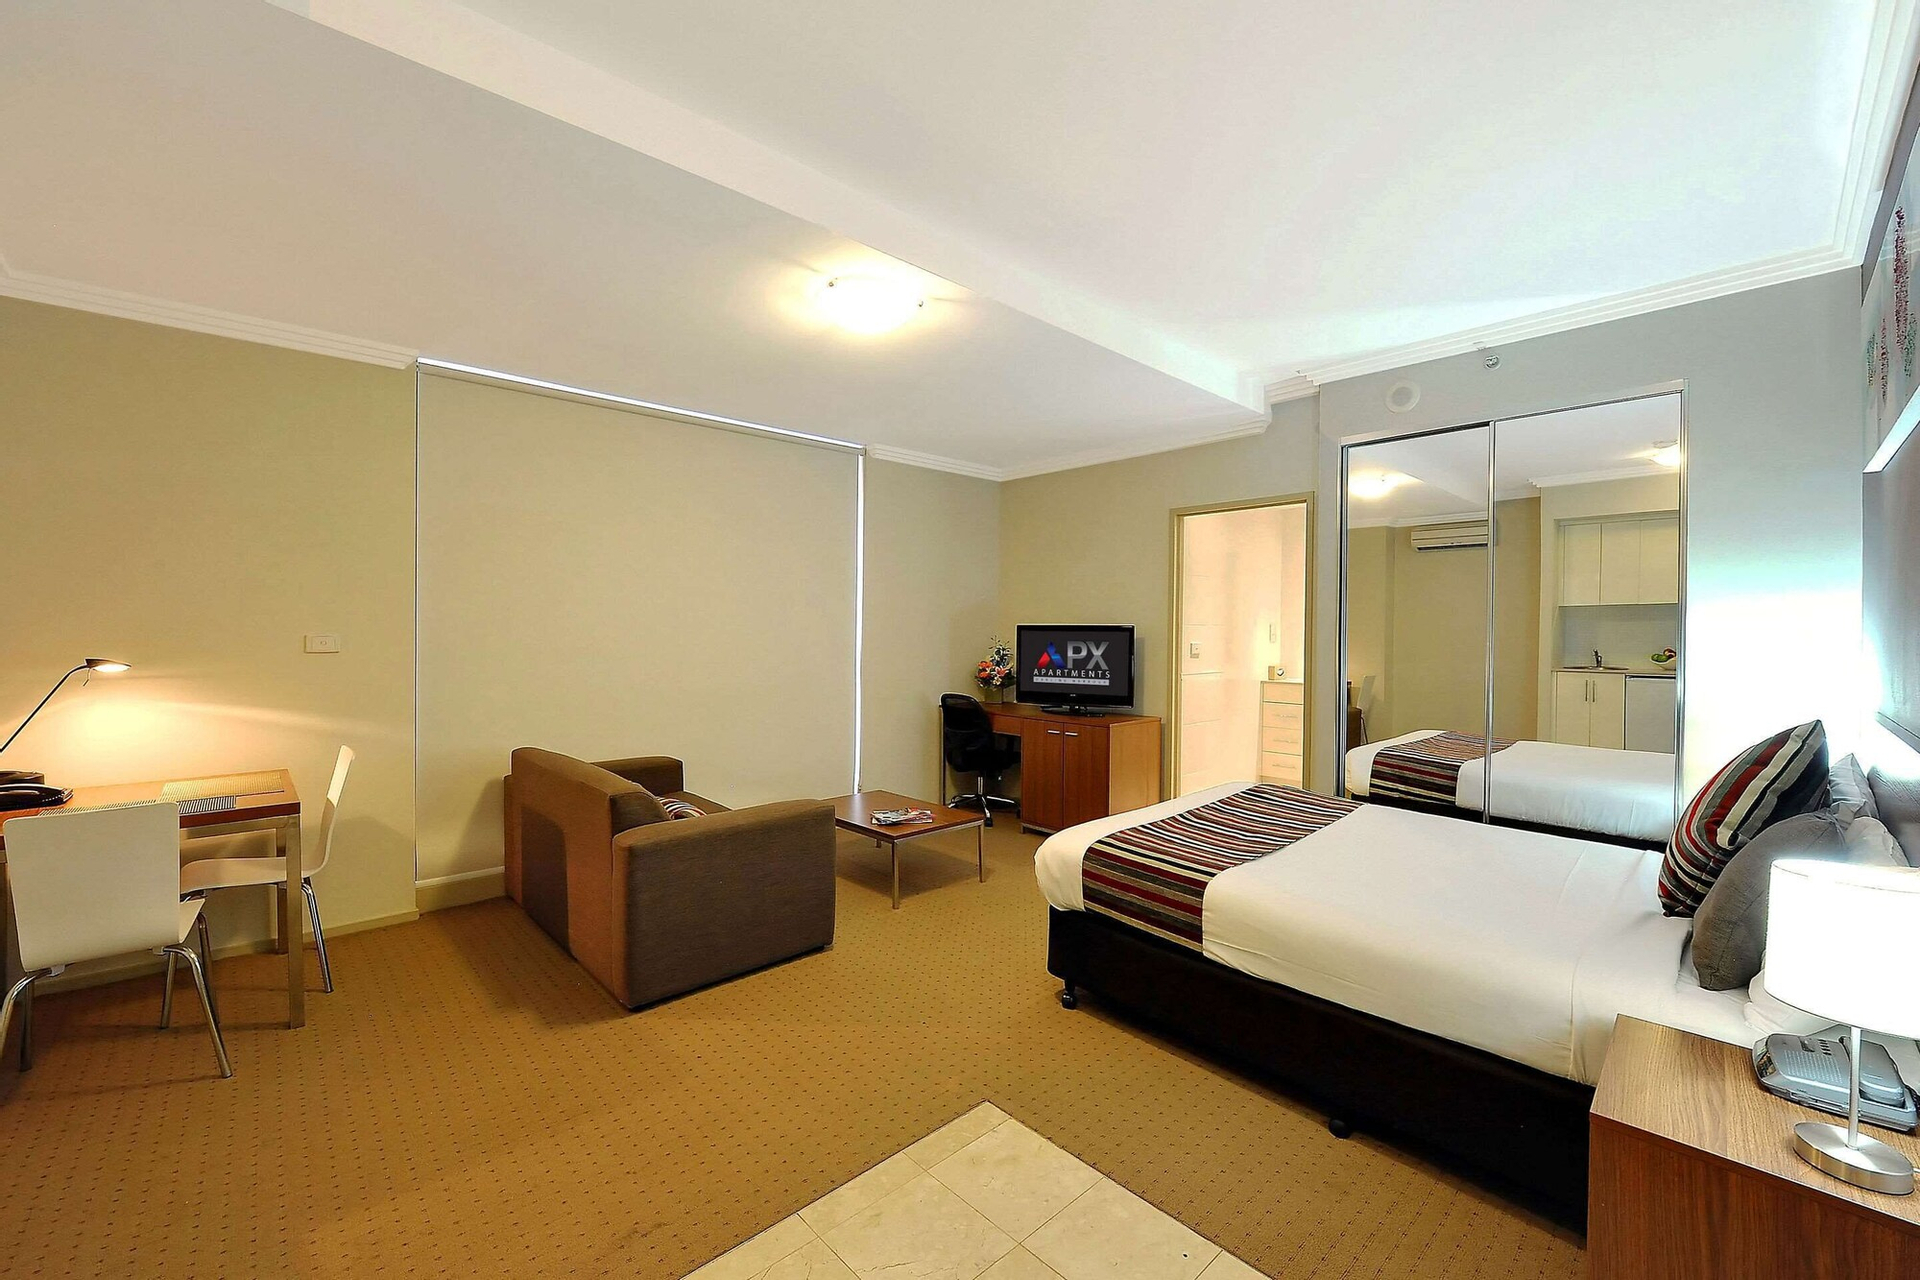 Bedroom 2, APX Darling Harbour, Sydney